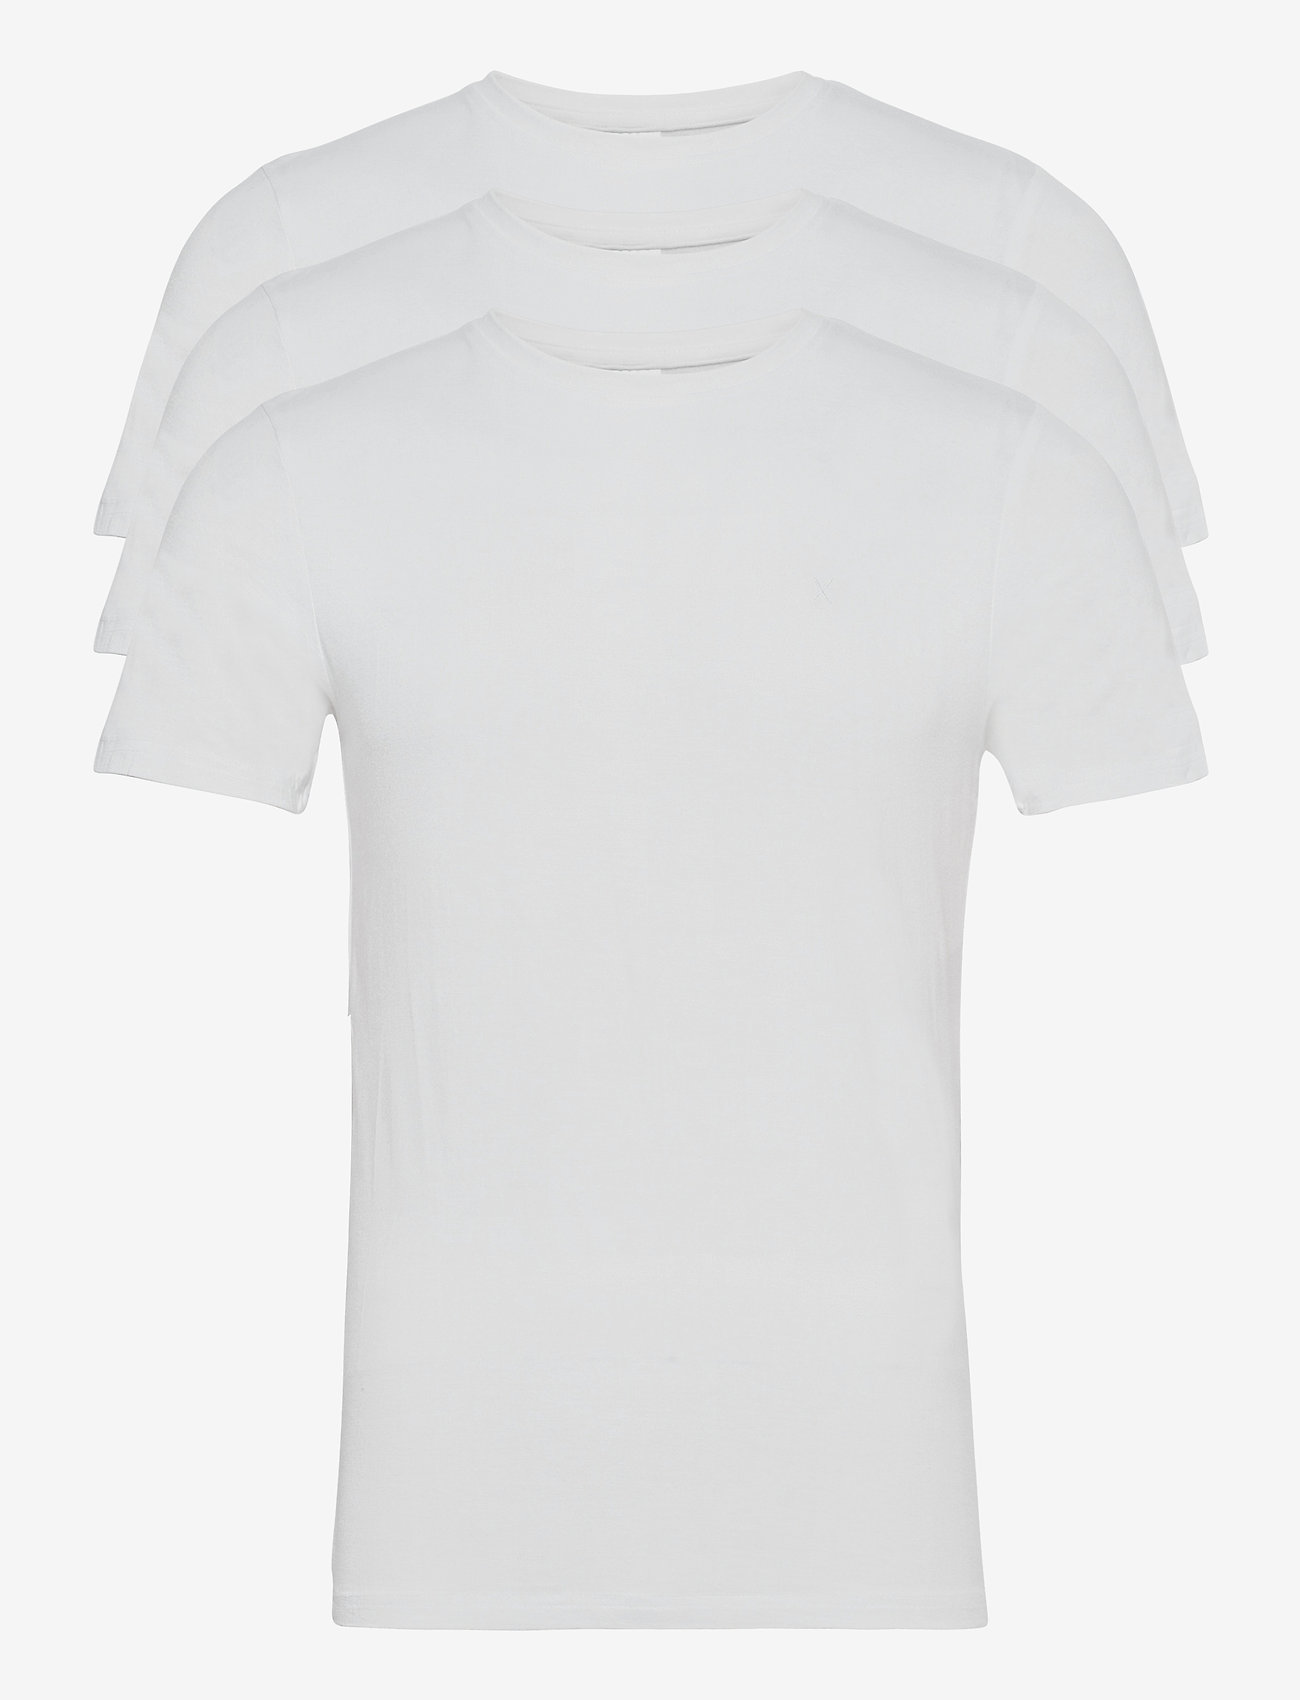 Clean Cut Copenhagen - 3-Pack Tee - Bamboo - laisvalaikio marškinėliai - white - 0